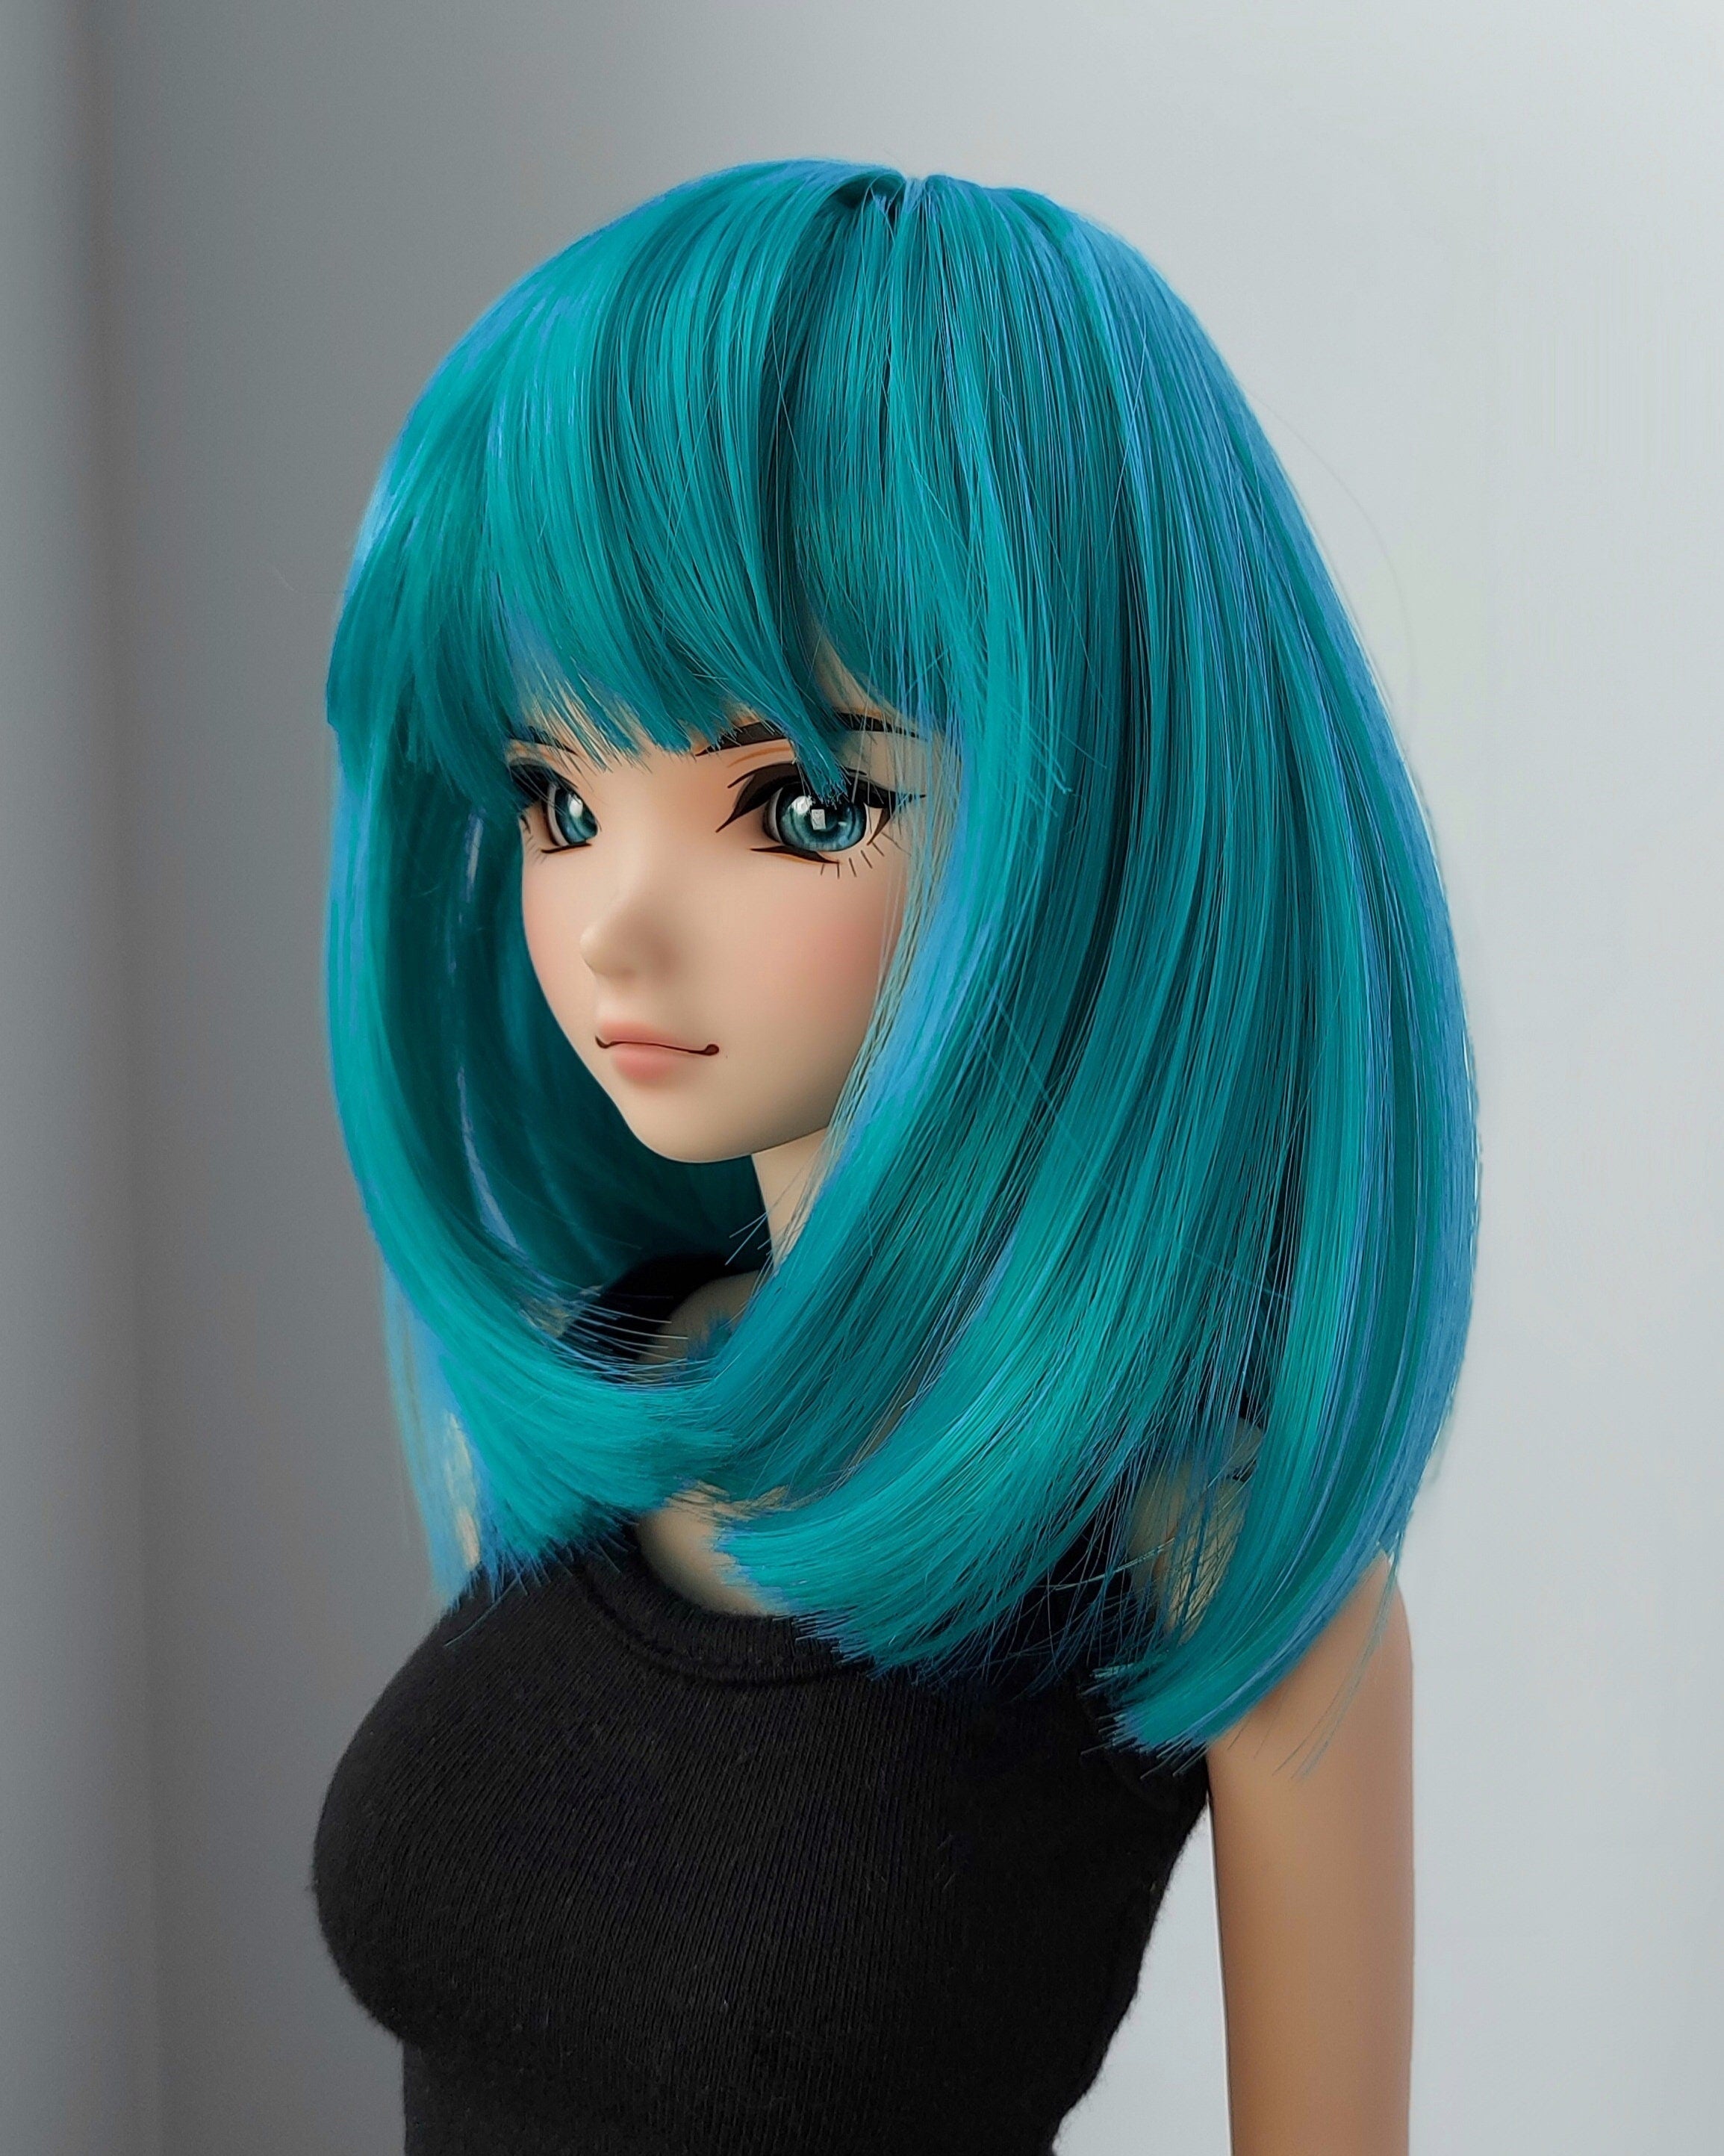 Custom doll Wig for Smart Dolls- Heat Safe - Tangle Resistant- 8.5" head size of Bjd, SD, Dollfie Dream dolls  Teal